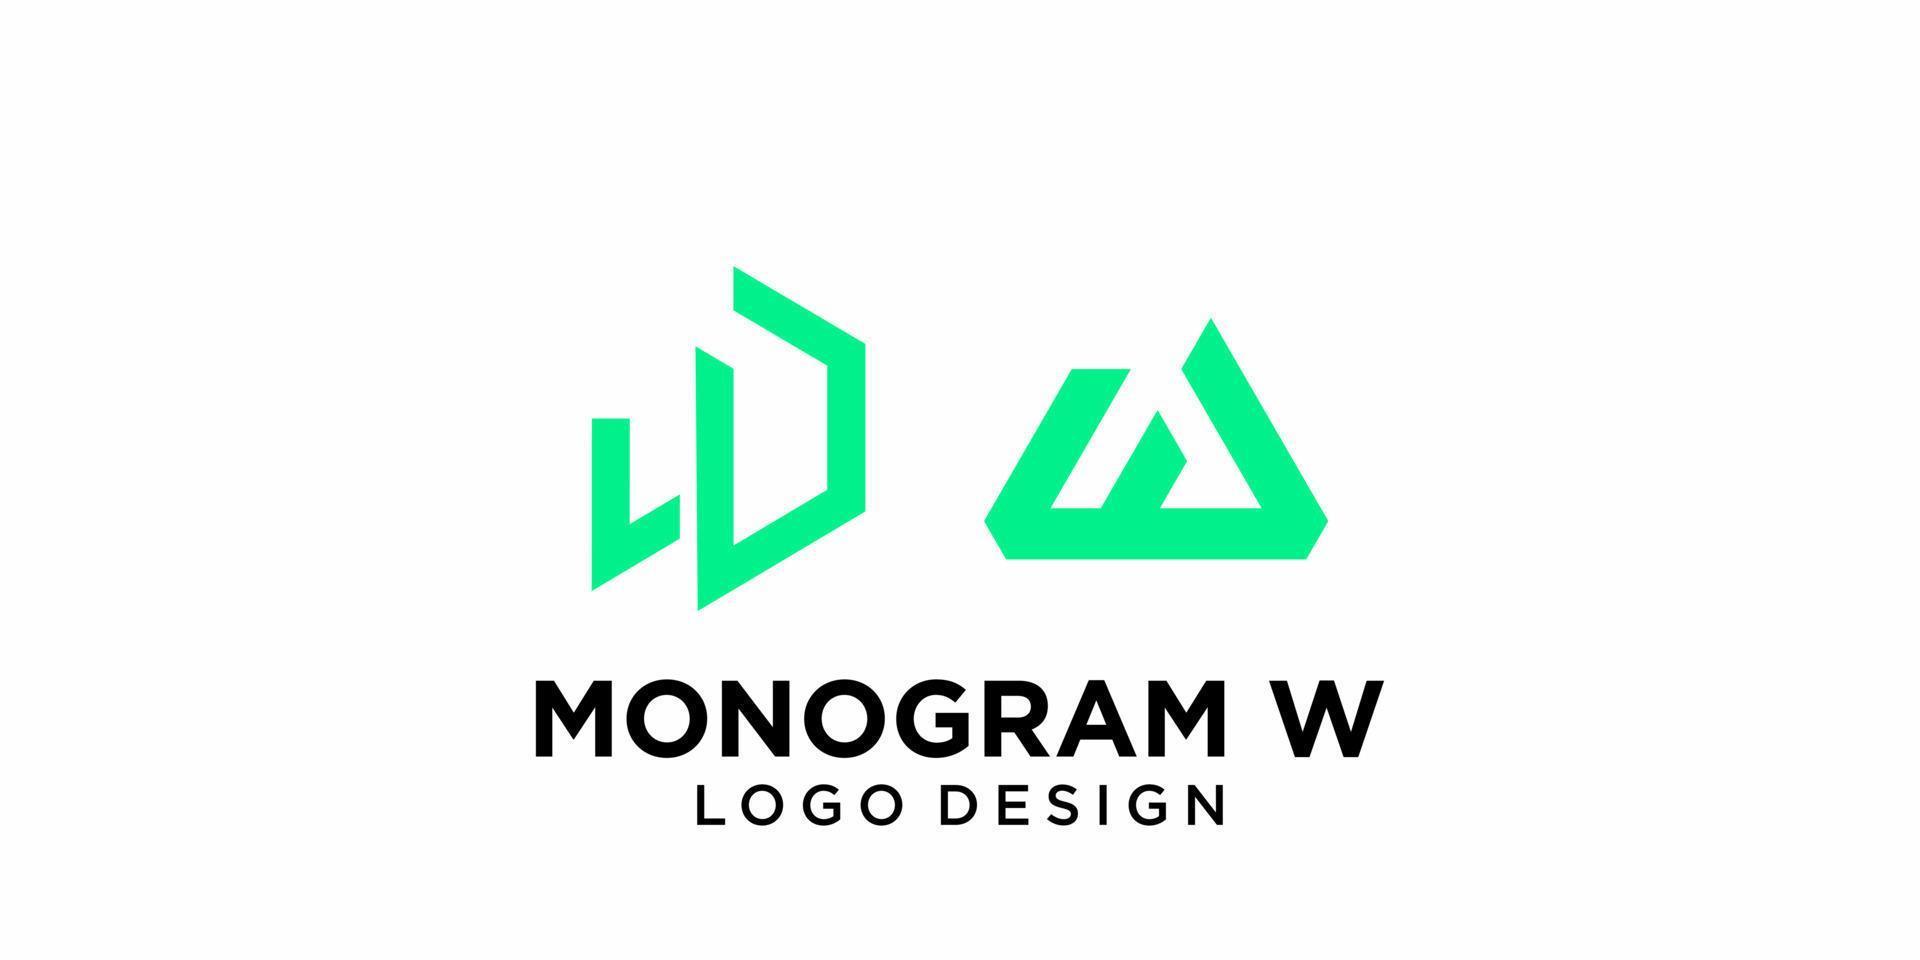 Two letter W monogram logo design on a light background. vector